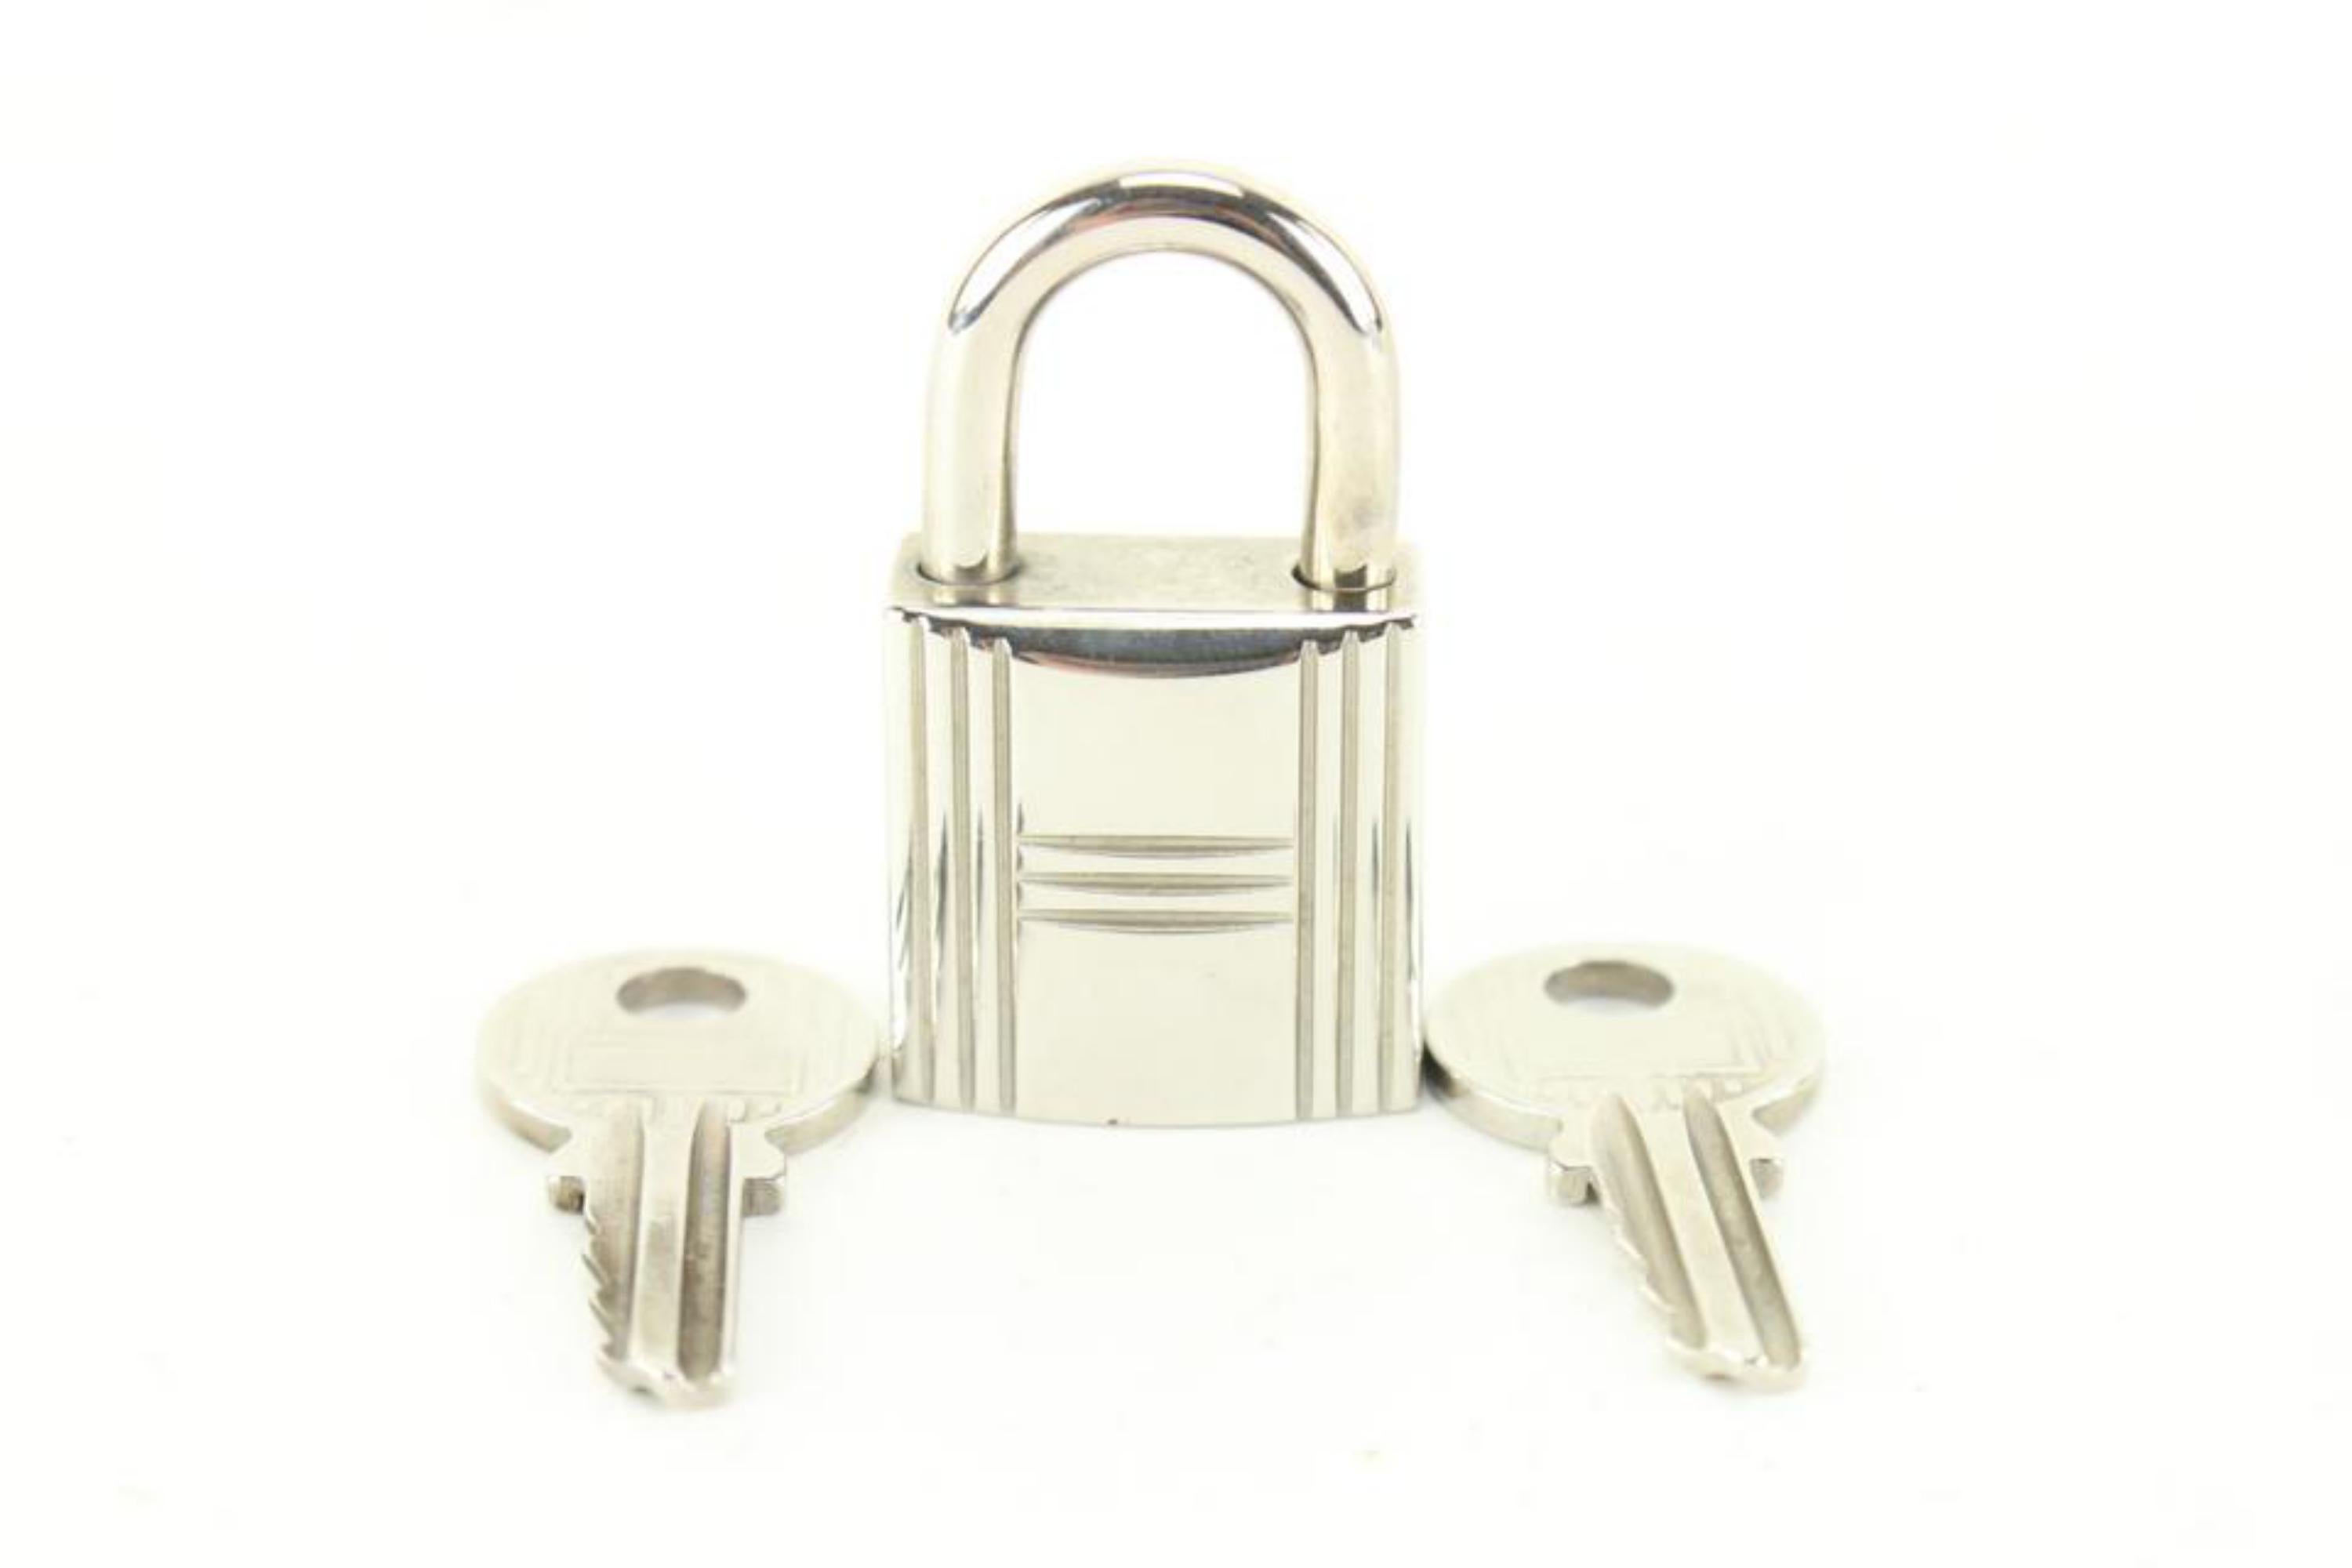 Hermès Palladium Cadena Padlock Lock and Key Set 8h712s 3